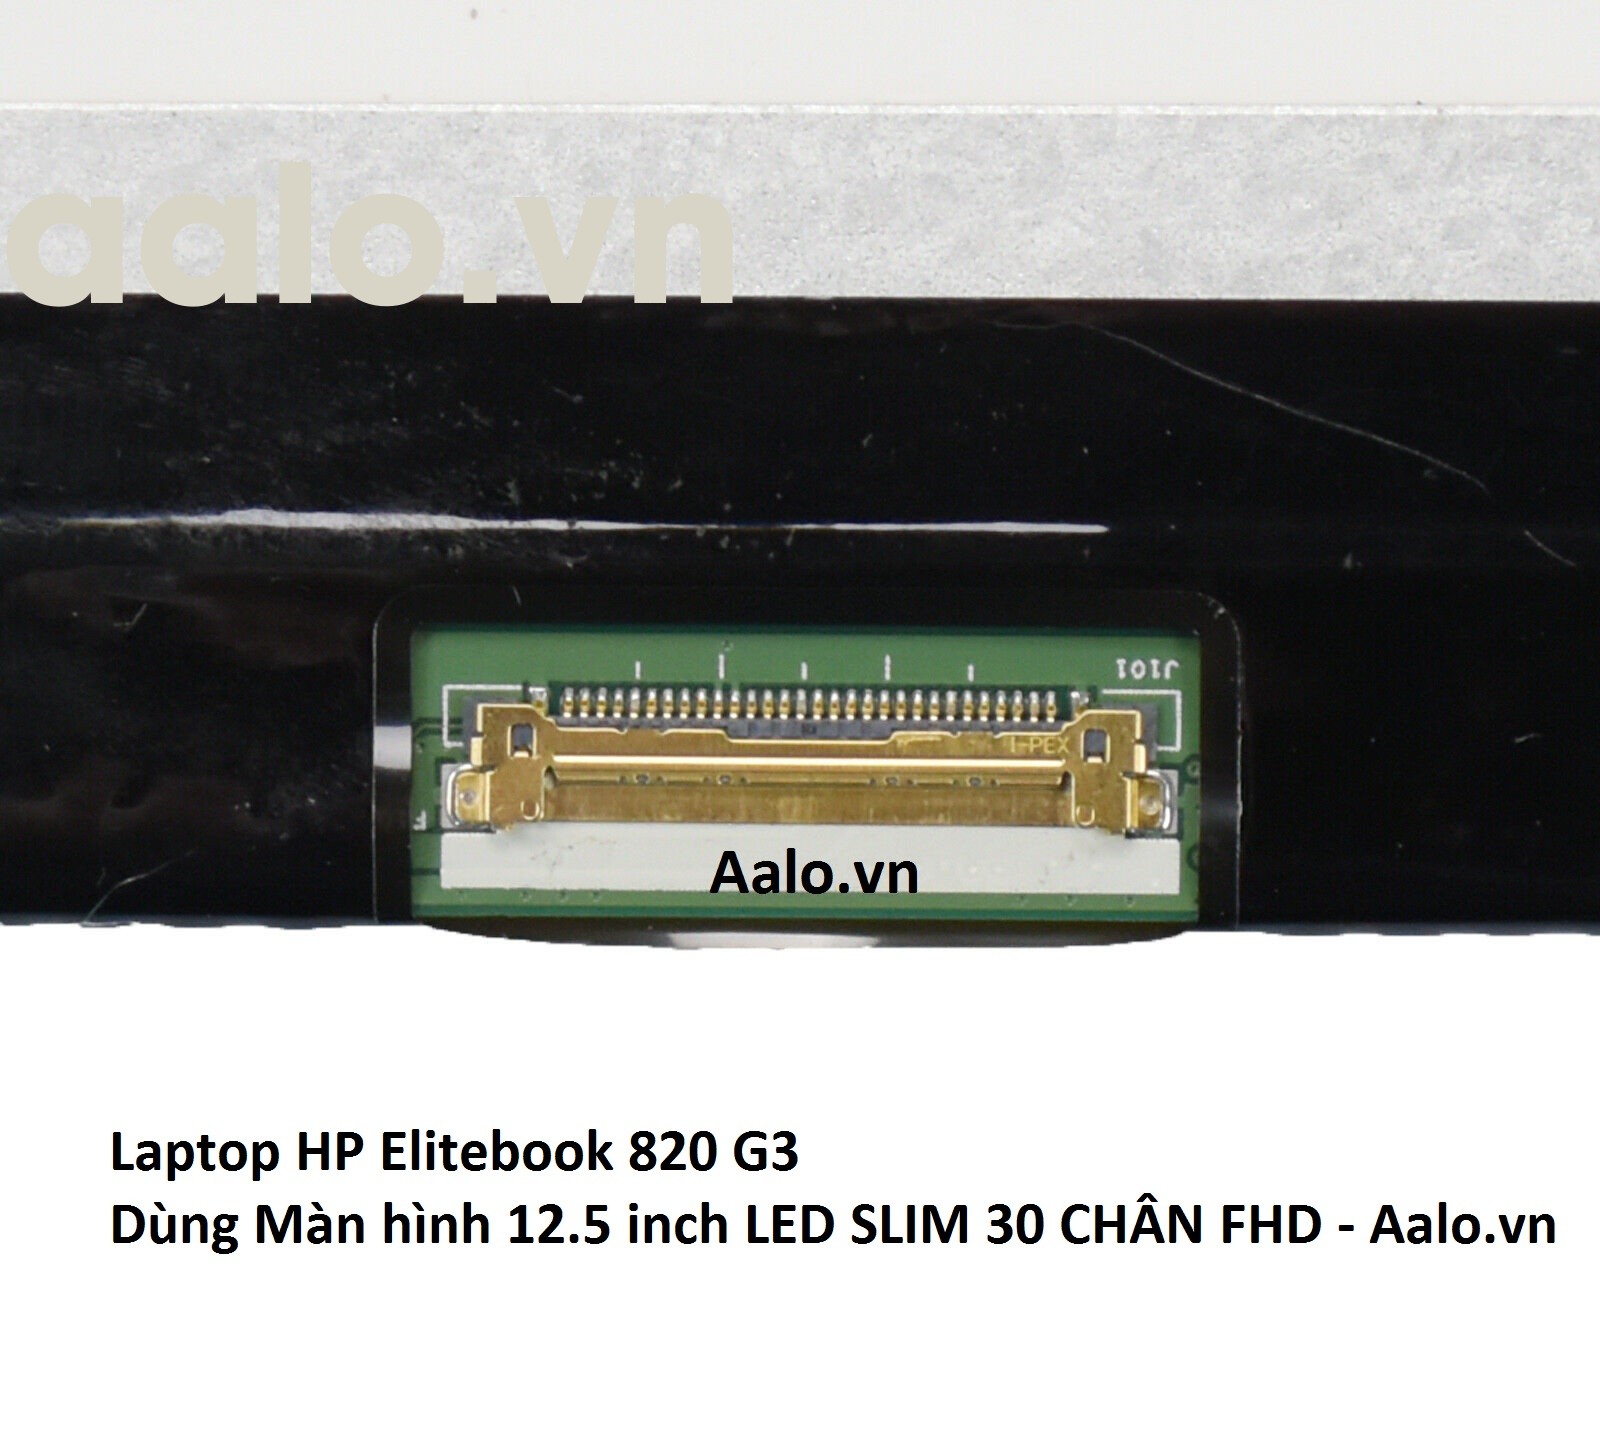 Màn hình Laptop HP Elitebook 820 G3